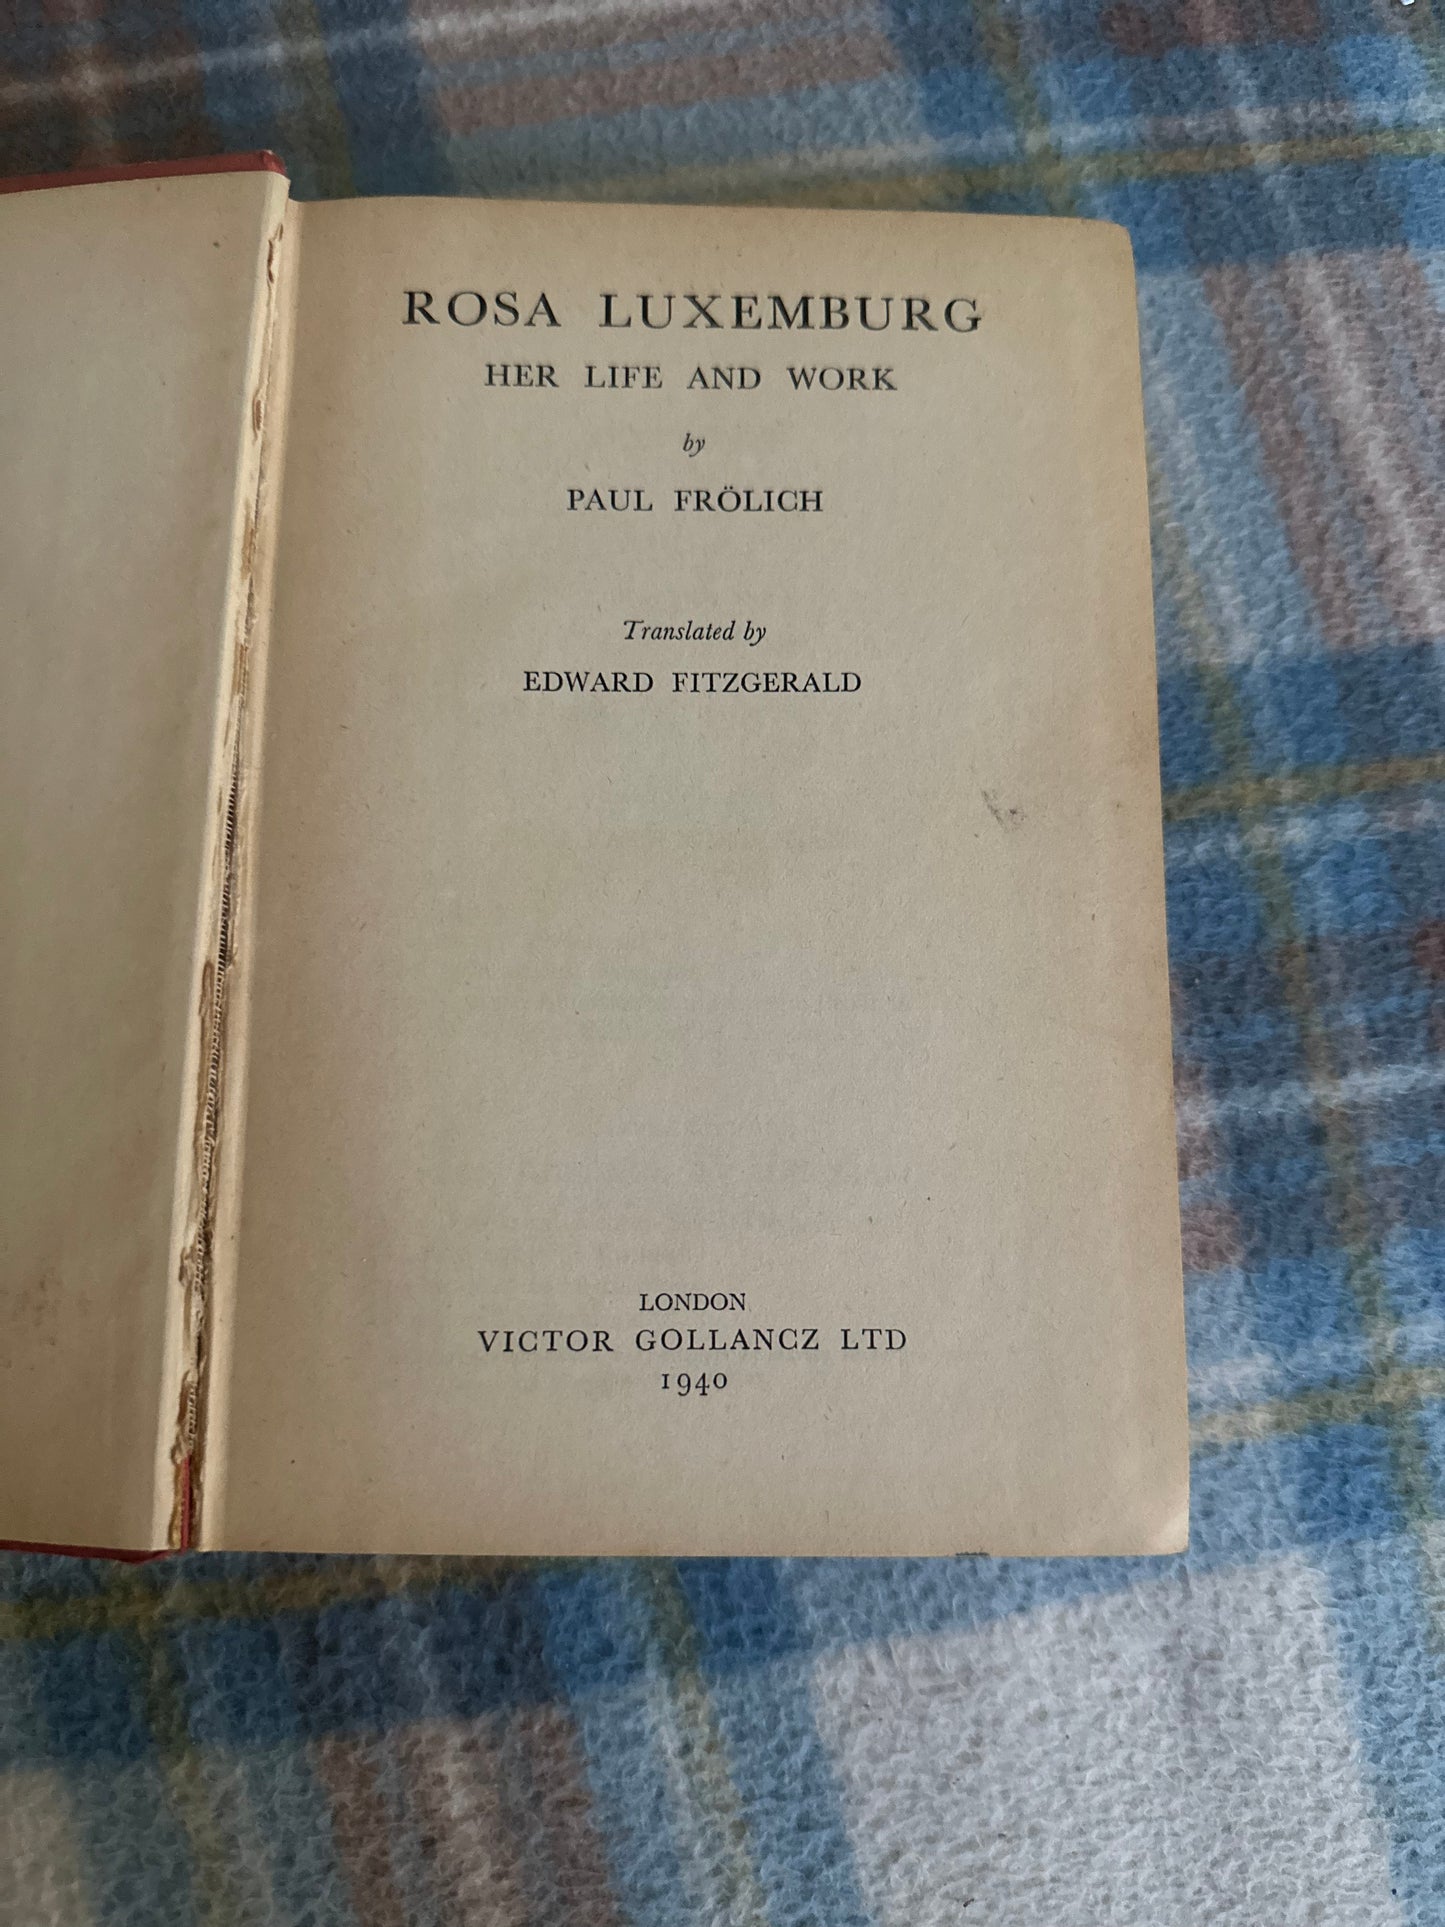 1940*1st* Rosa Luxemburg - Paul Frölich (Left Book Club Private Printing) Victor Gollancz Ltd